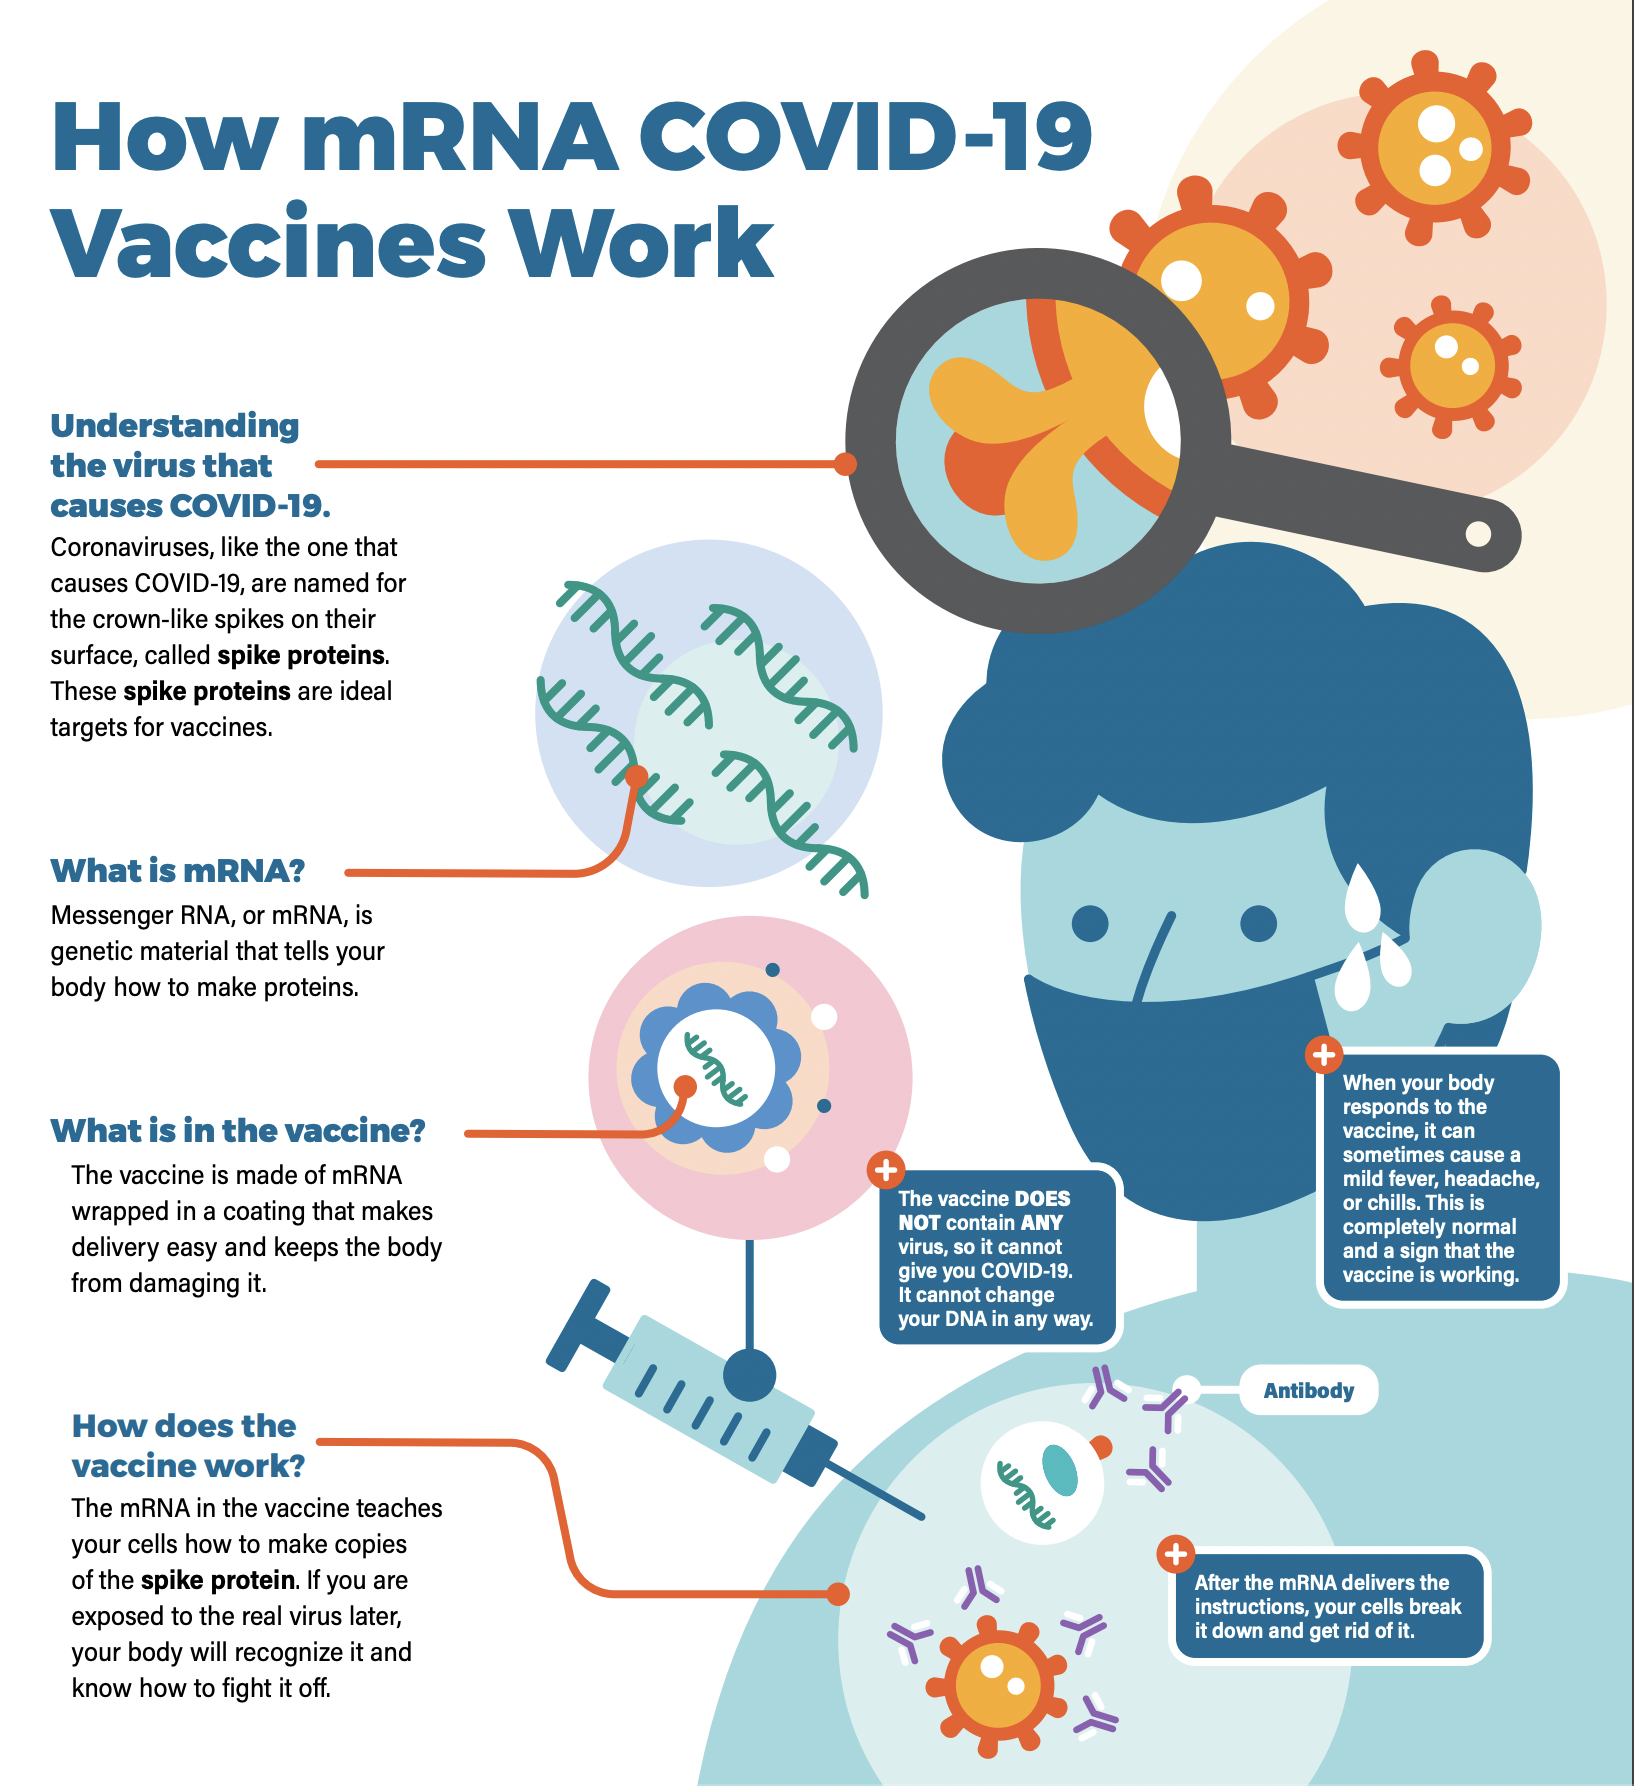 How mRNA COVID-19 vaccines work